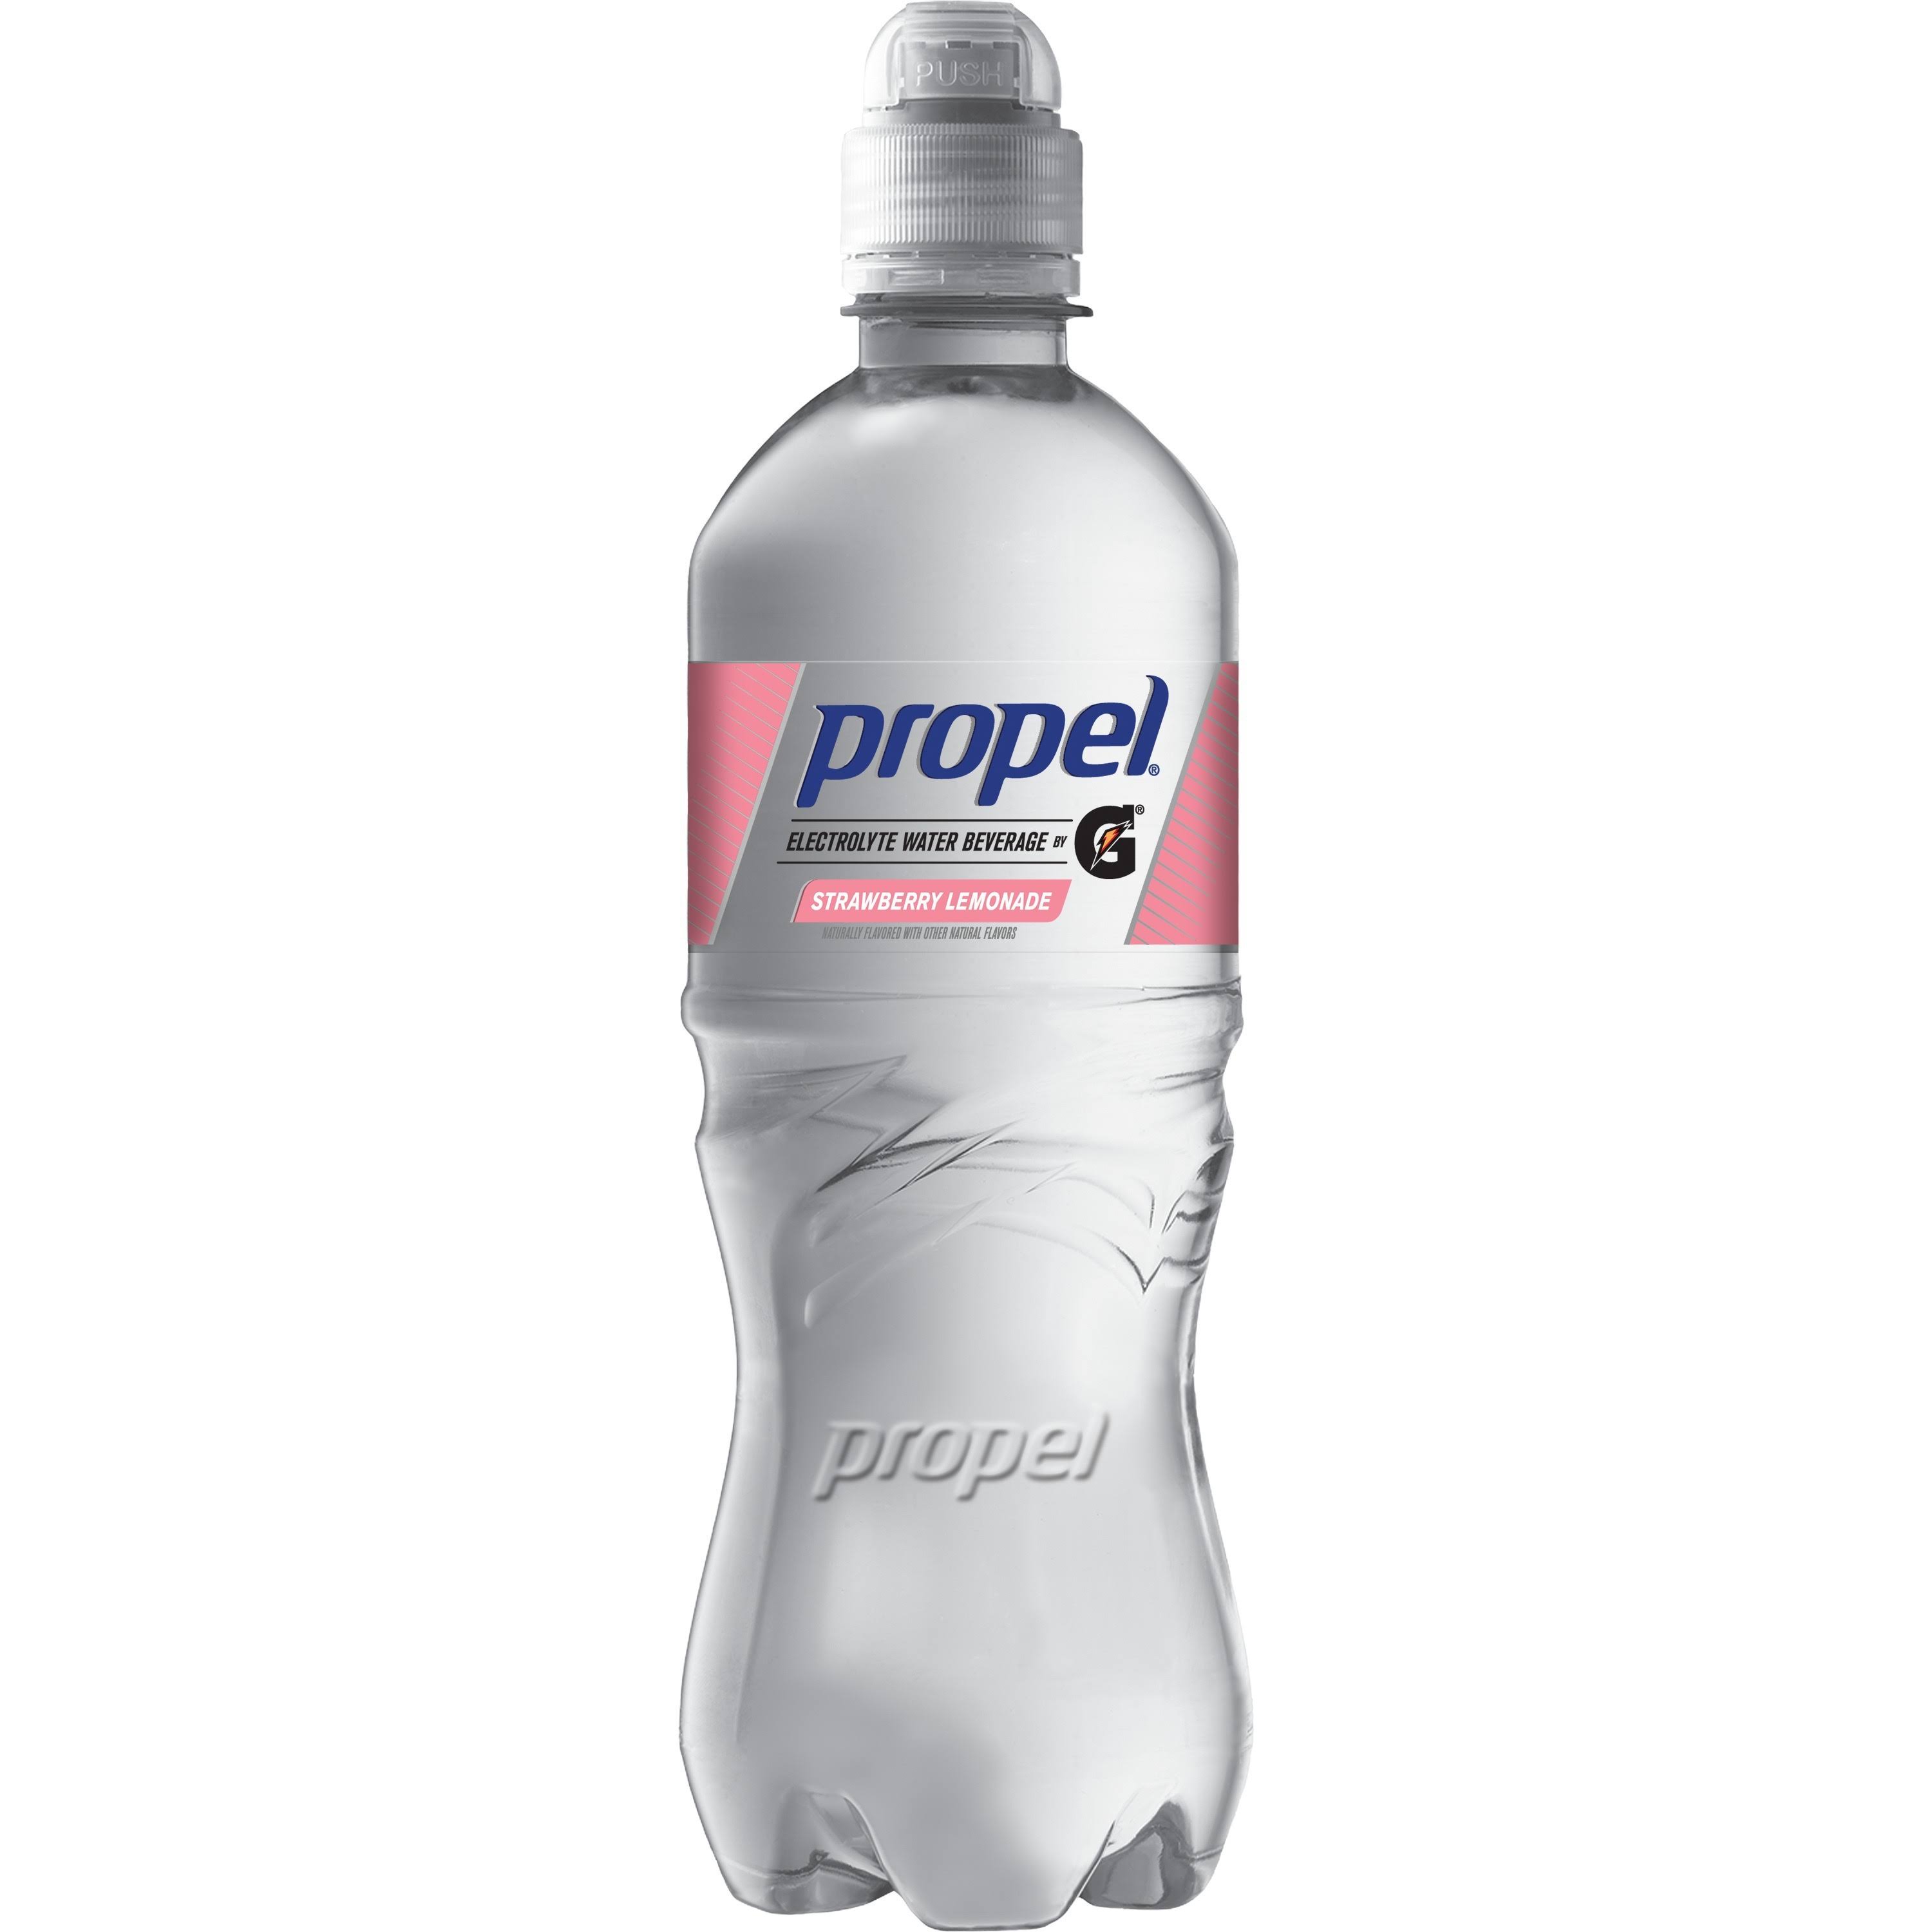 Propel Water Beverage - Strawberry Lemonade, 20oz